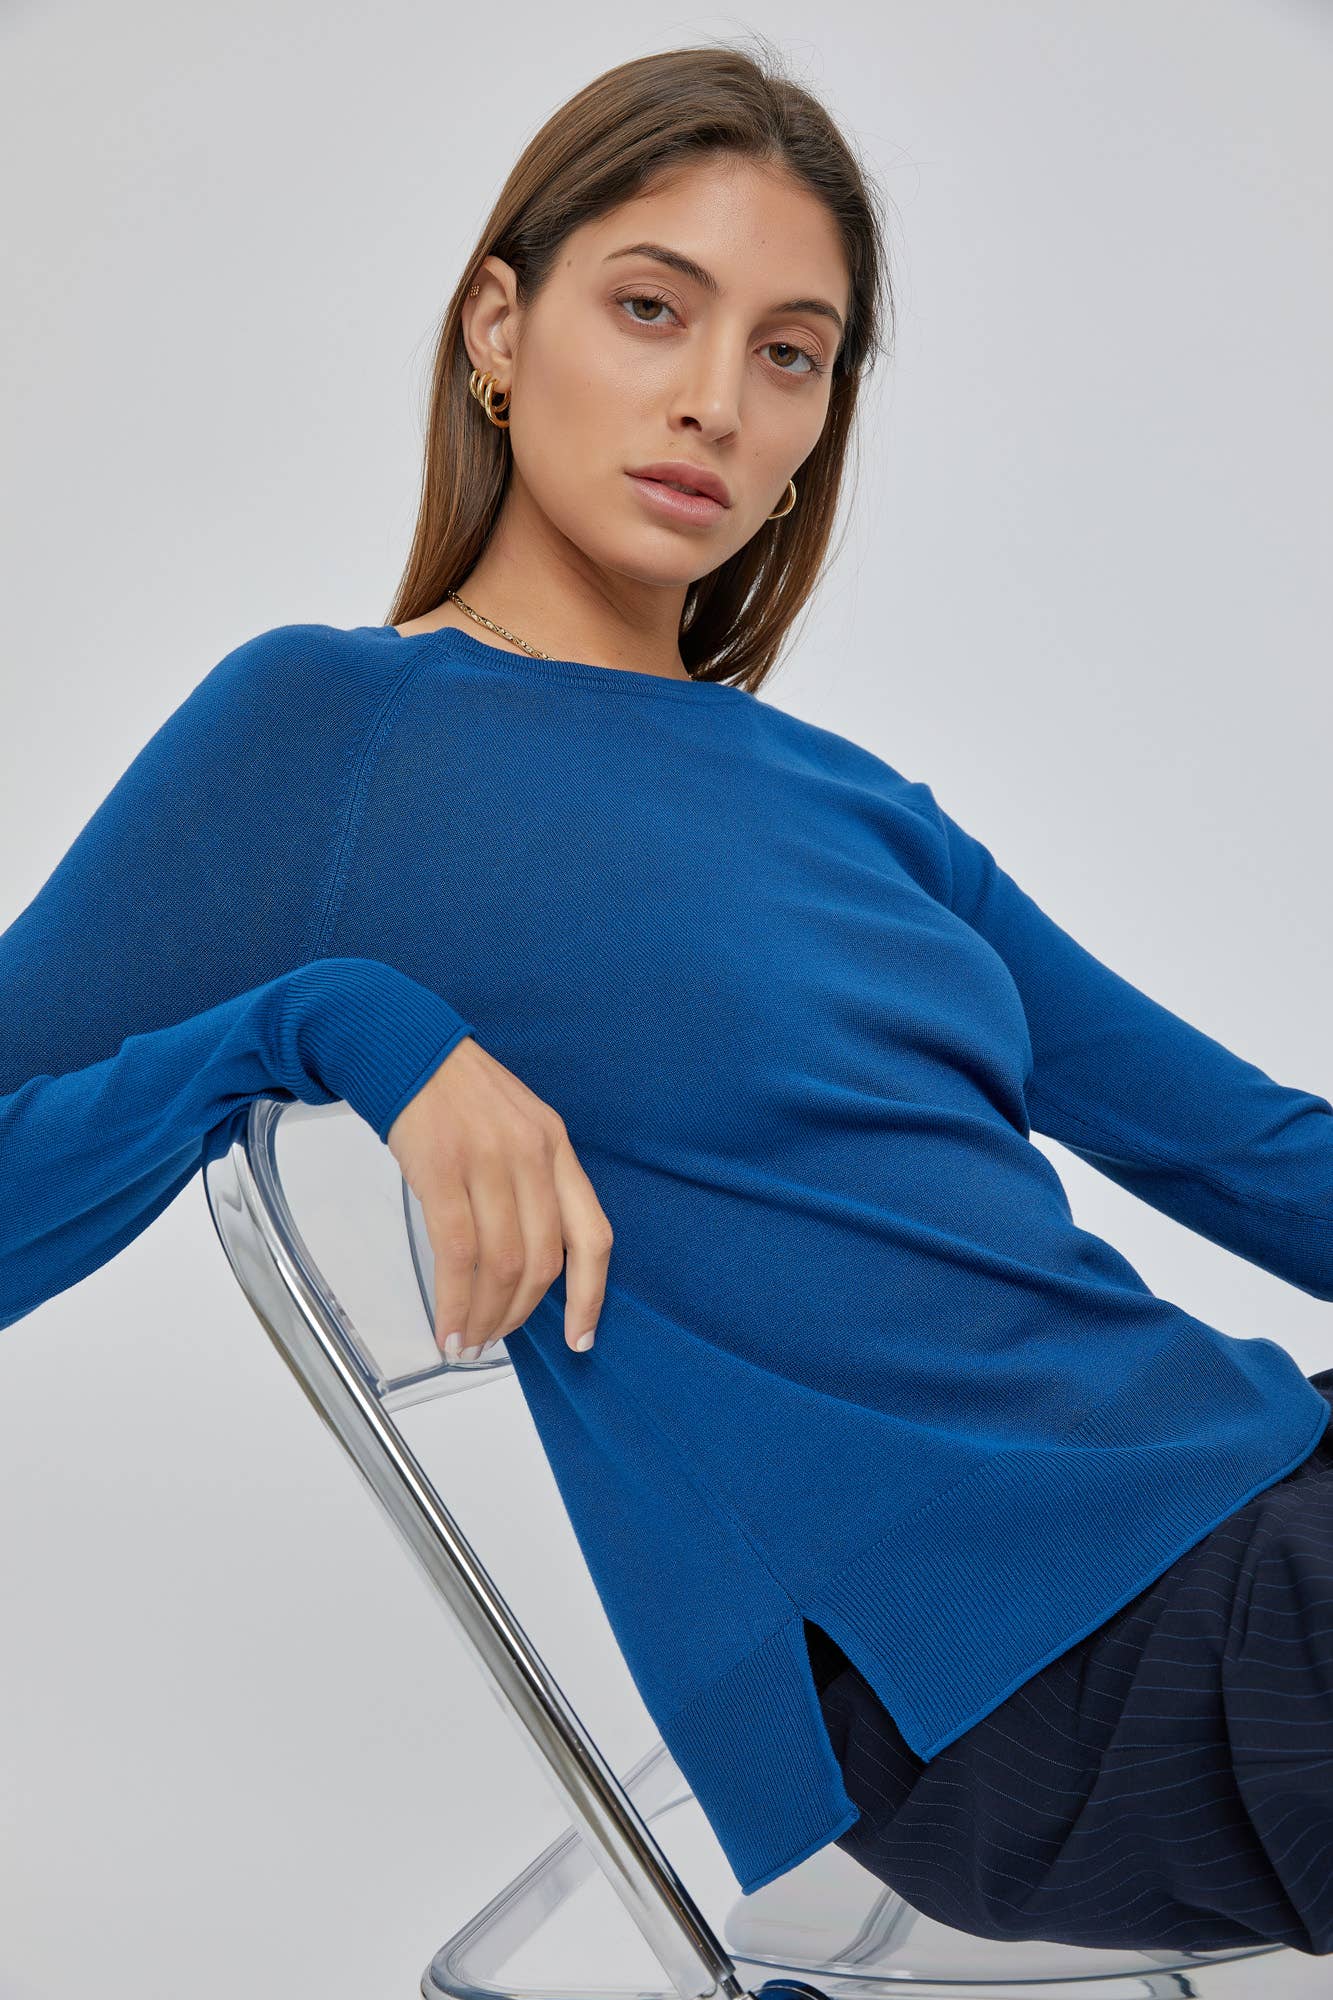 The Camille Sweater: Medium / H. Grey